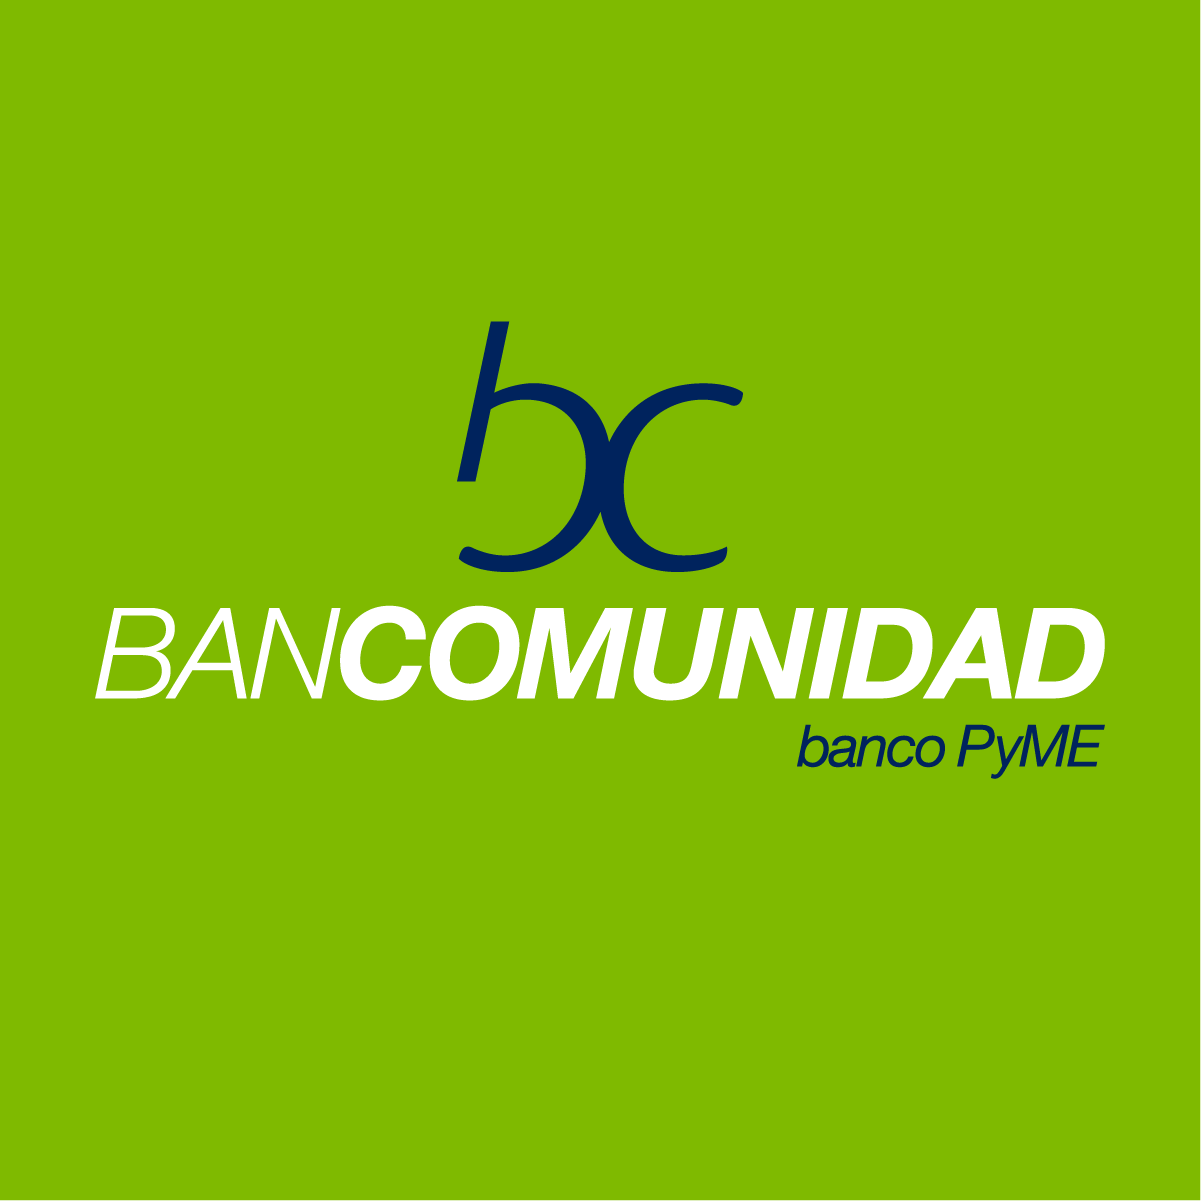 bancomunidad-logo.png